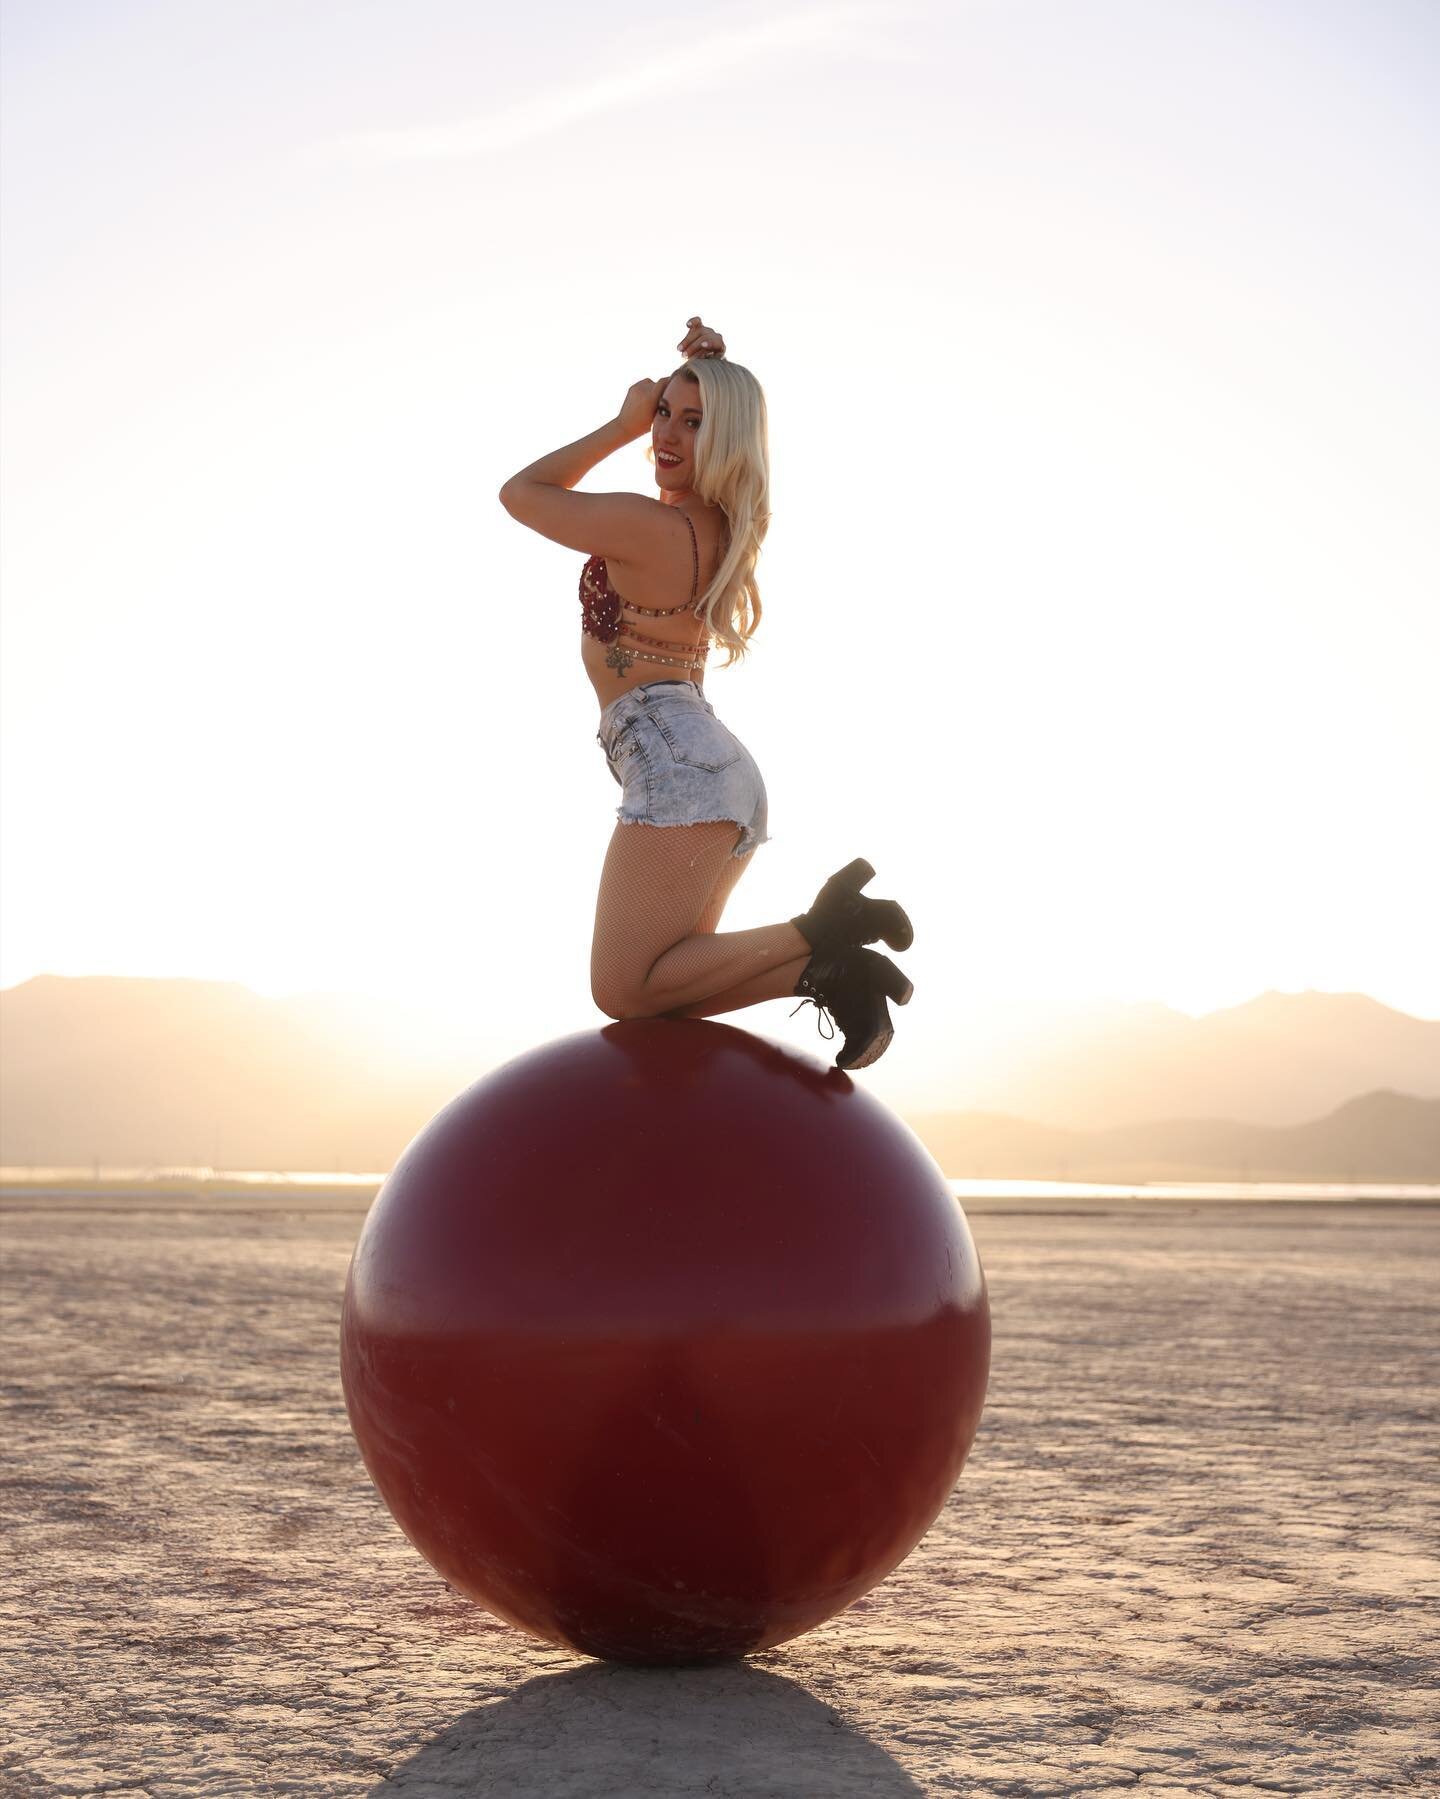 Always having a ball in the Las Vegas desert 🏜️ 

📸 @kurtisdowns 

#circus #desertphotography #photoshoot #lasvegas